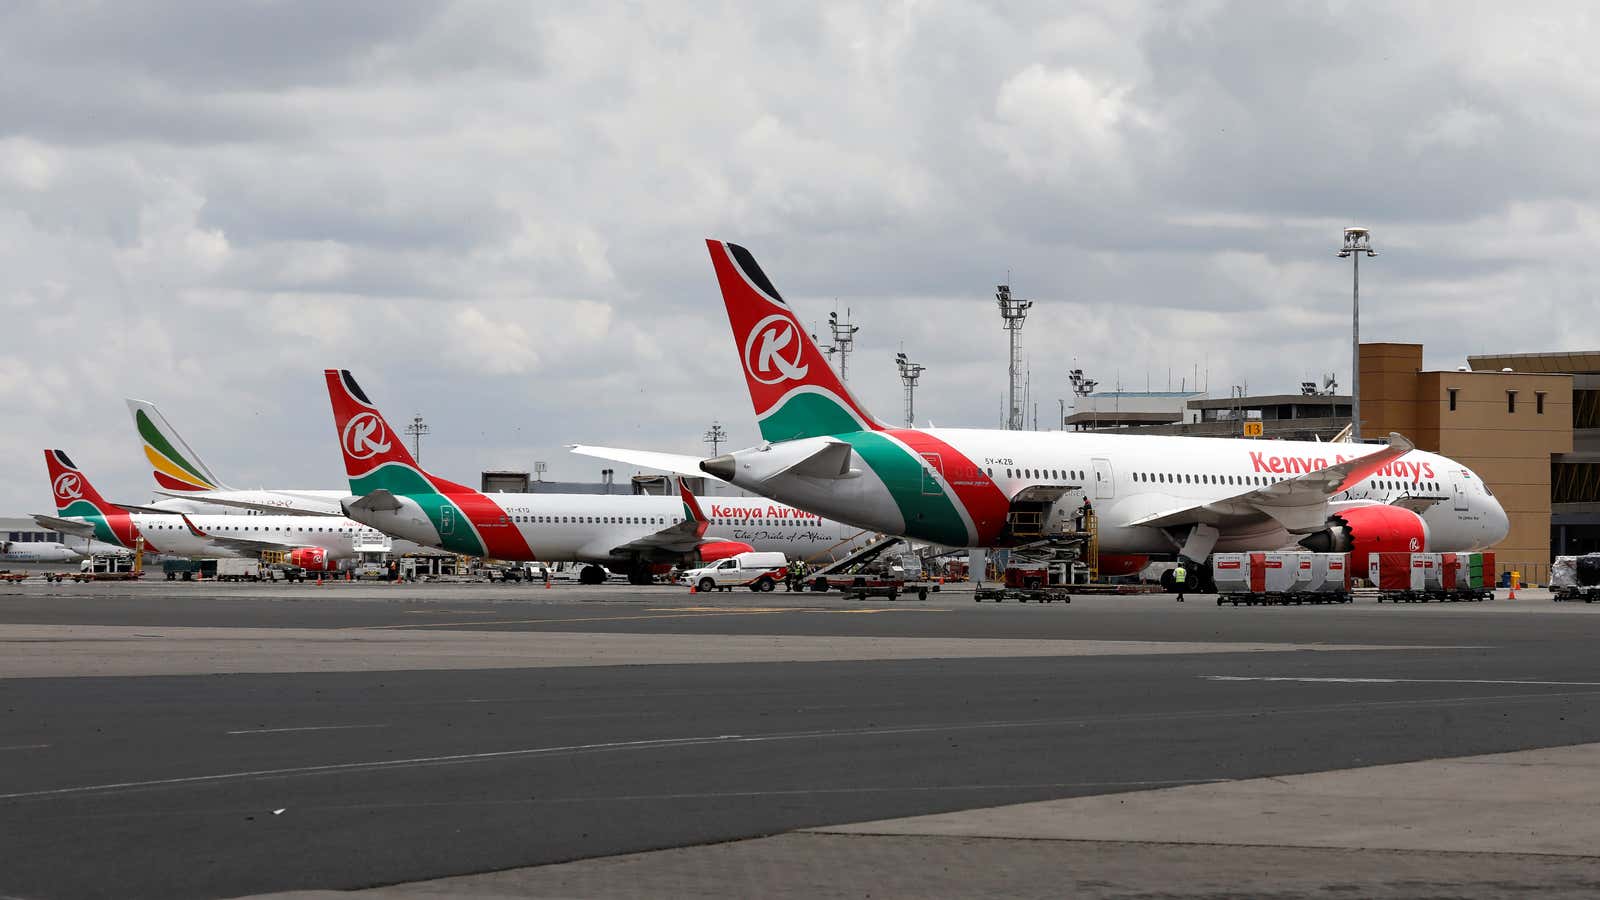 The Jomo Kenyatta International Airport in Nairobi, Kenya.